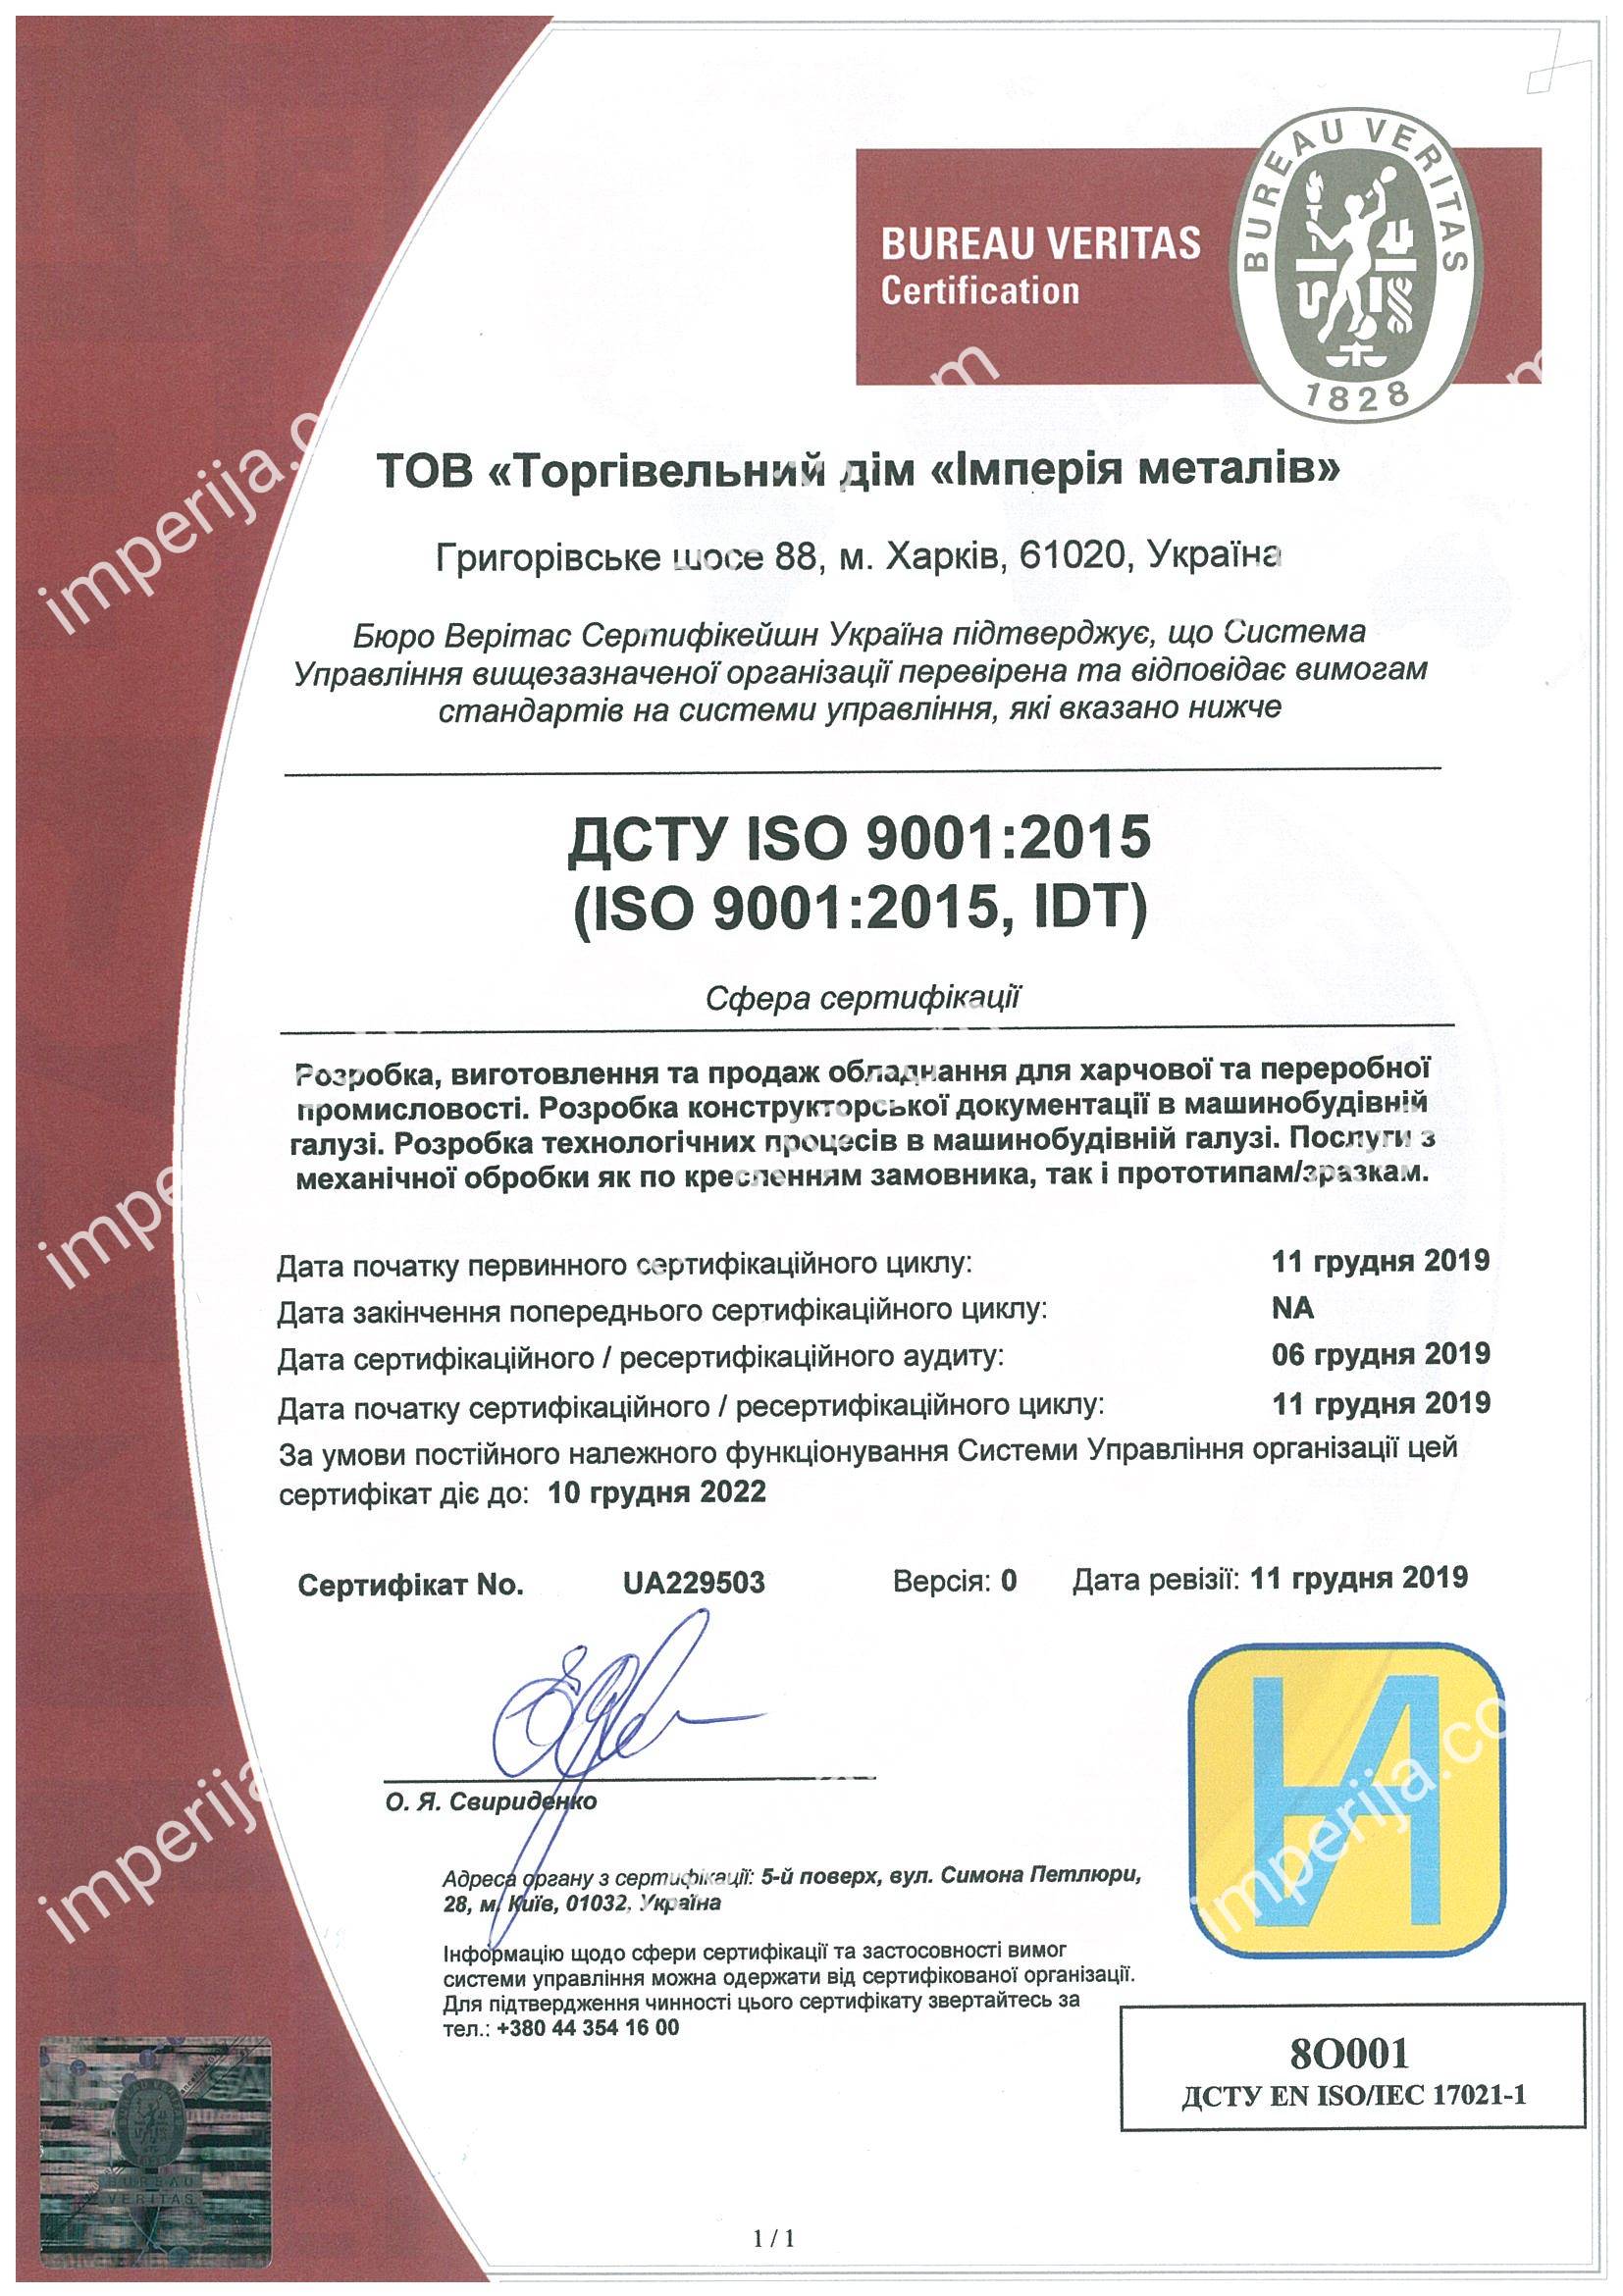 517.jpg - Получен Cертификат соответствия ISO 9001:2015